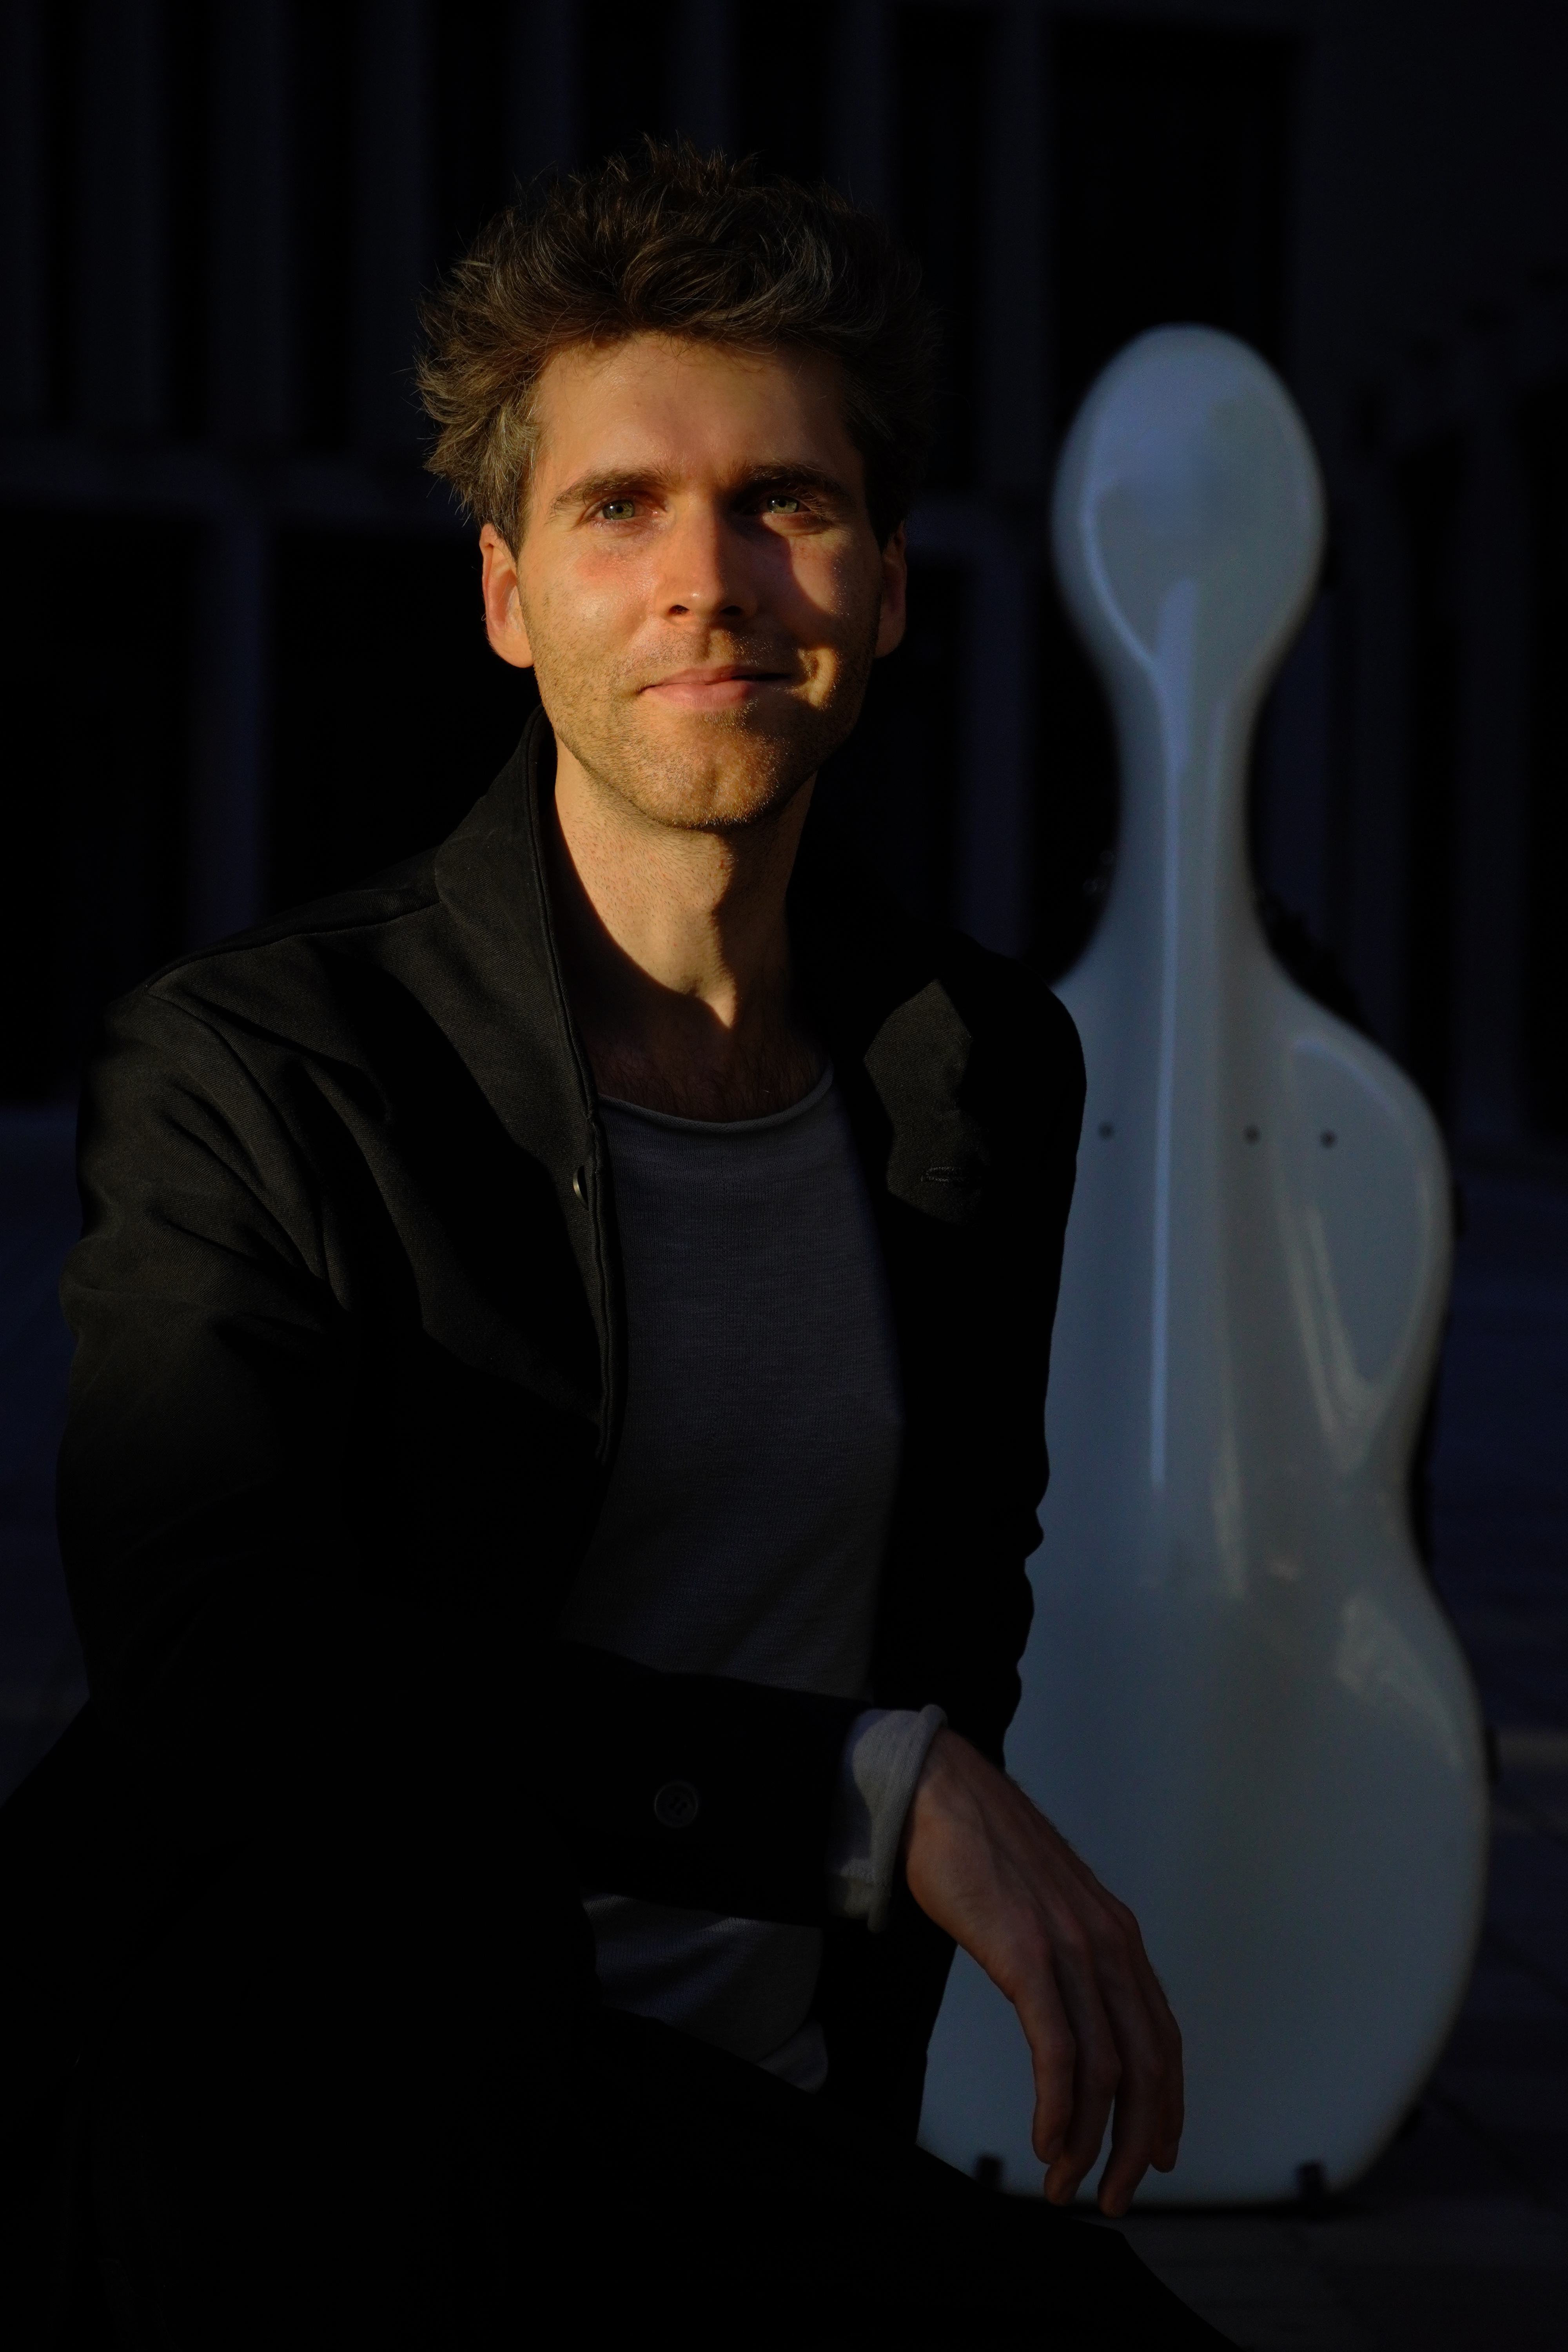 Graham Cello